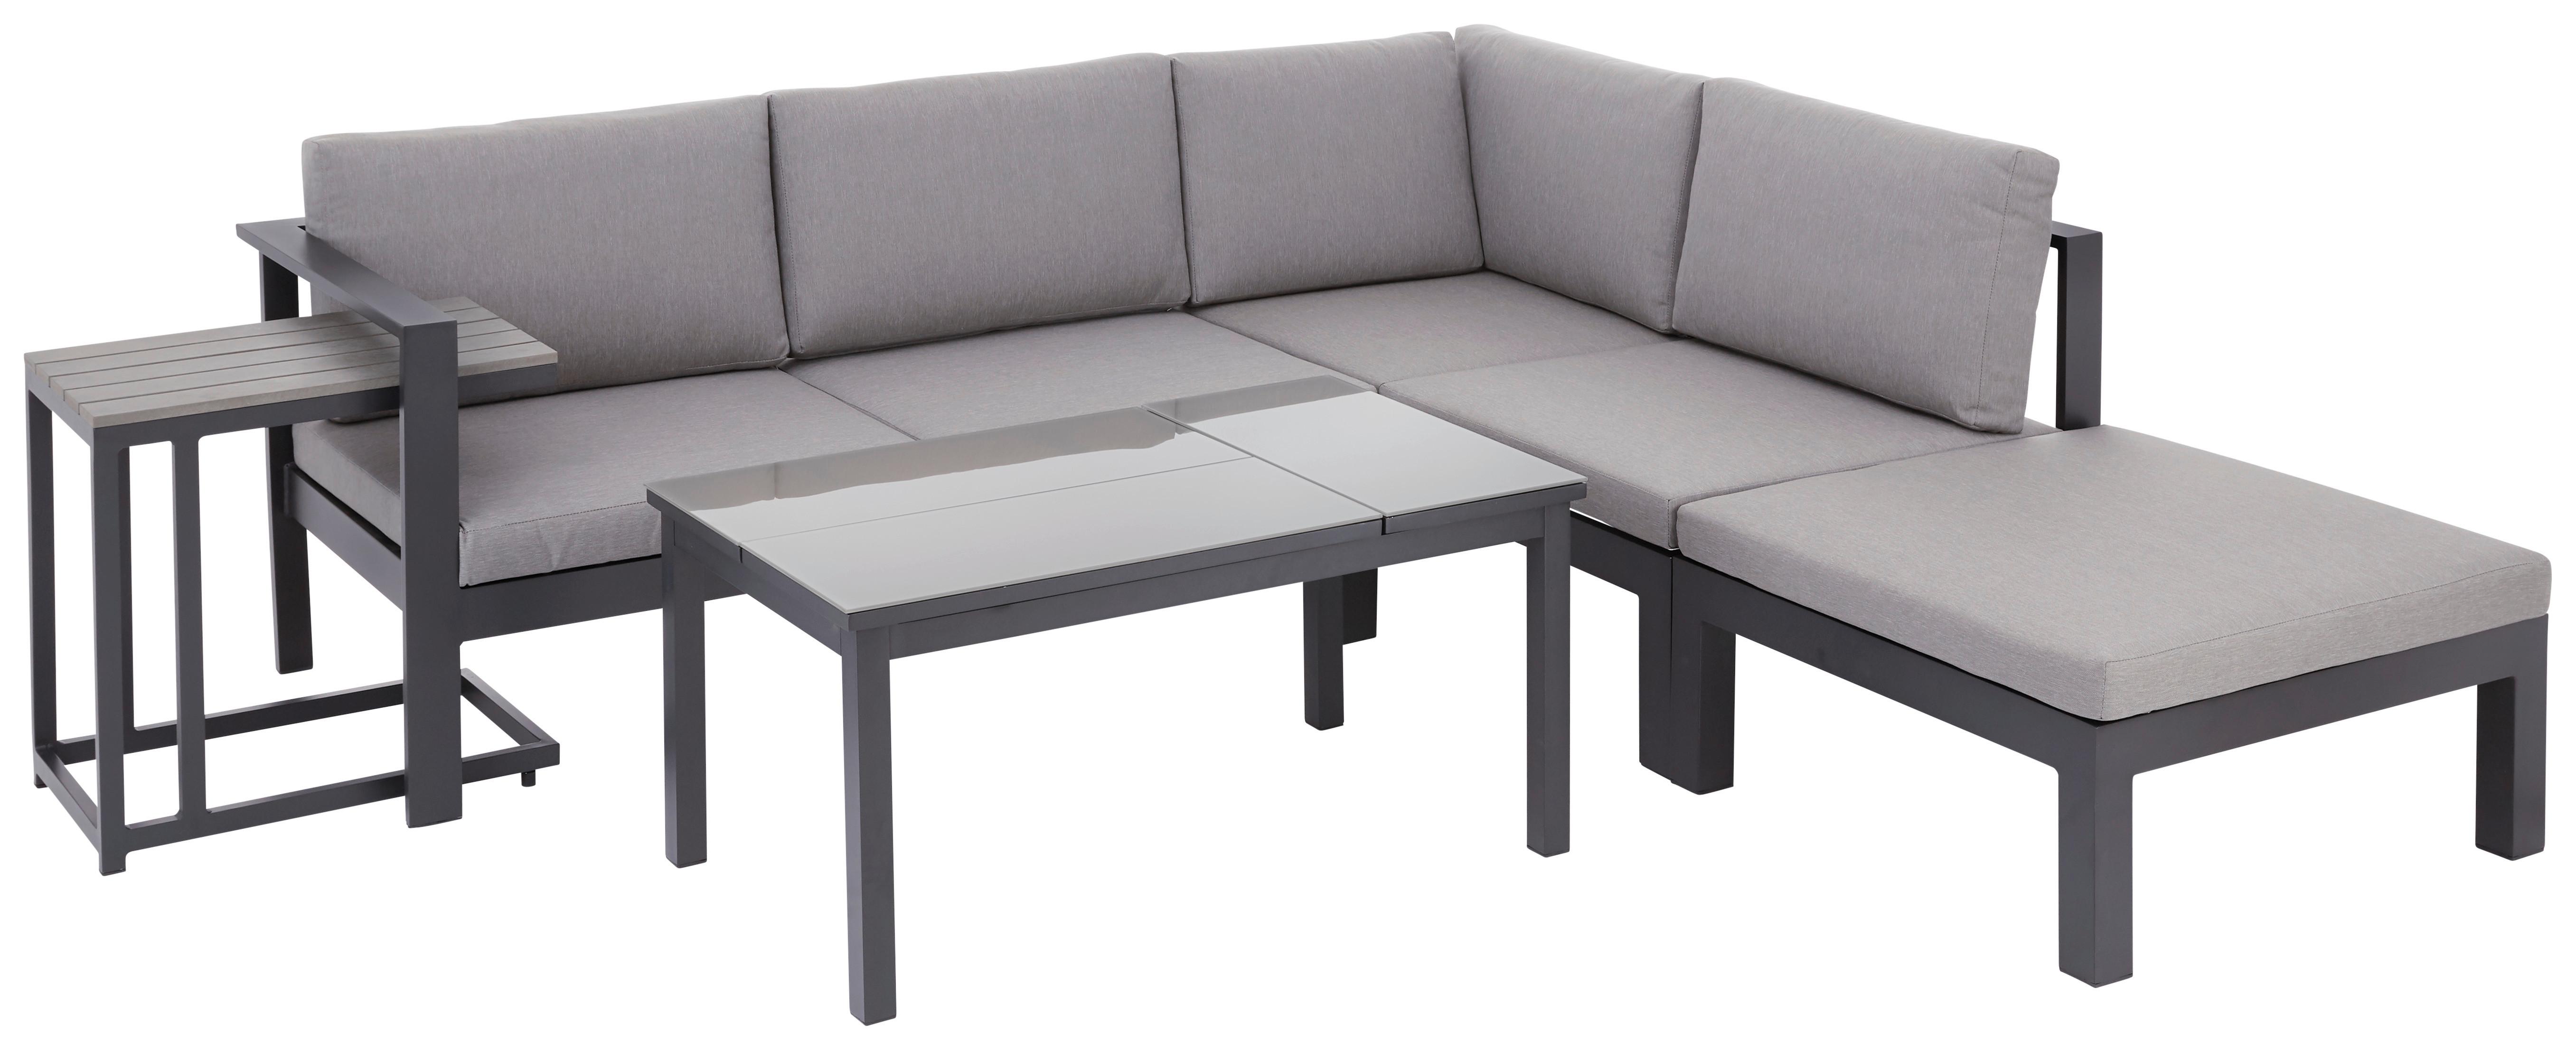 Lounge Garnitúra Panama - iszap/fekete, modern, műanyag/Üveg (224/224cm) - Beldano